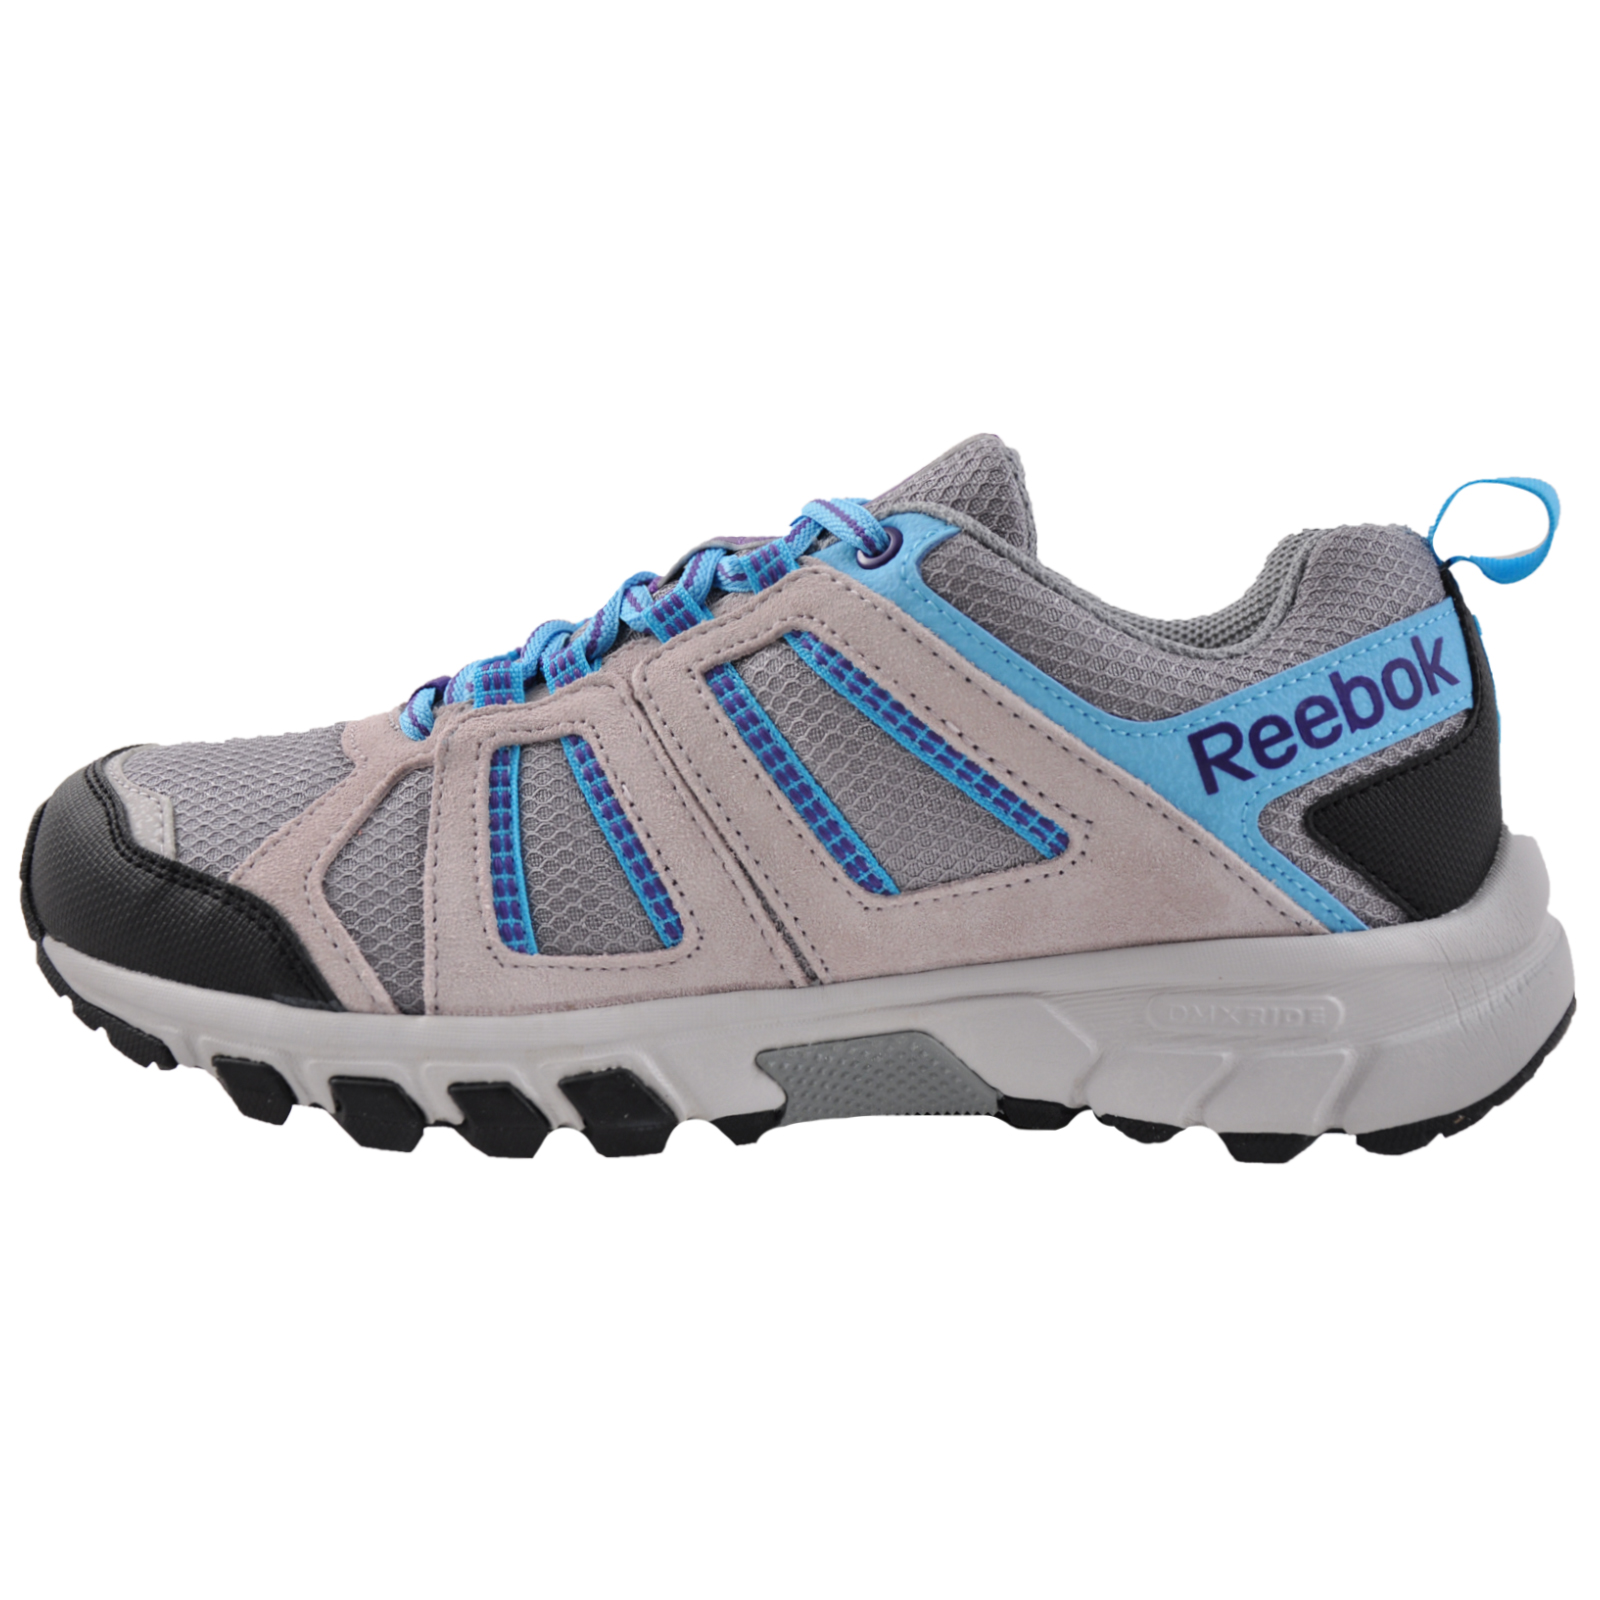 reebok dmx ride women's running shoes